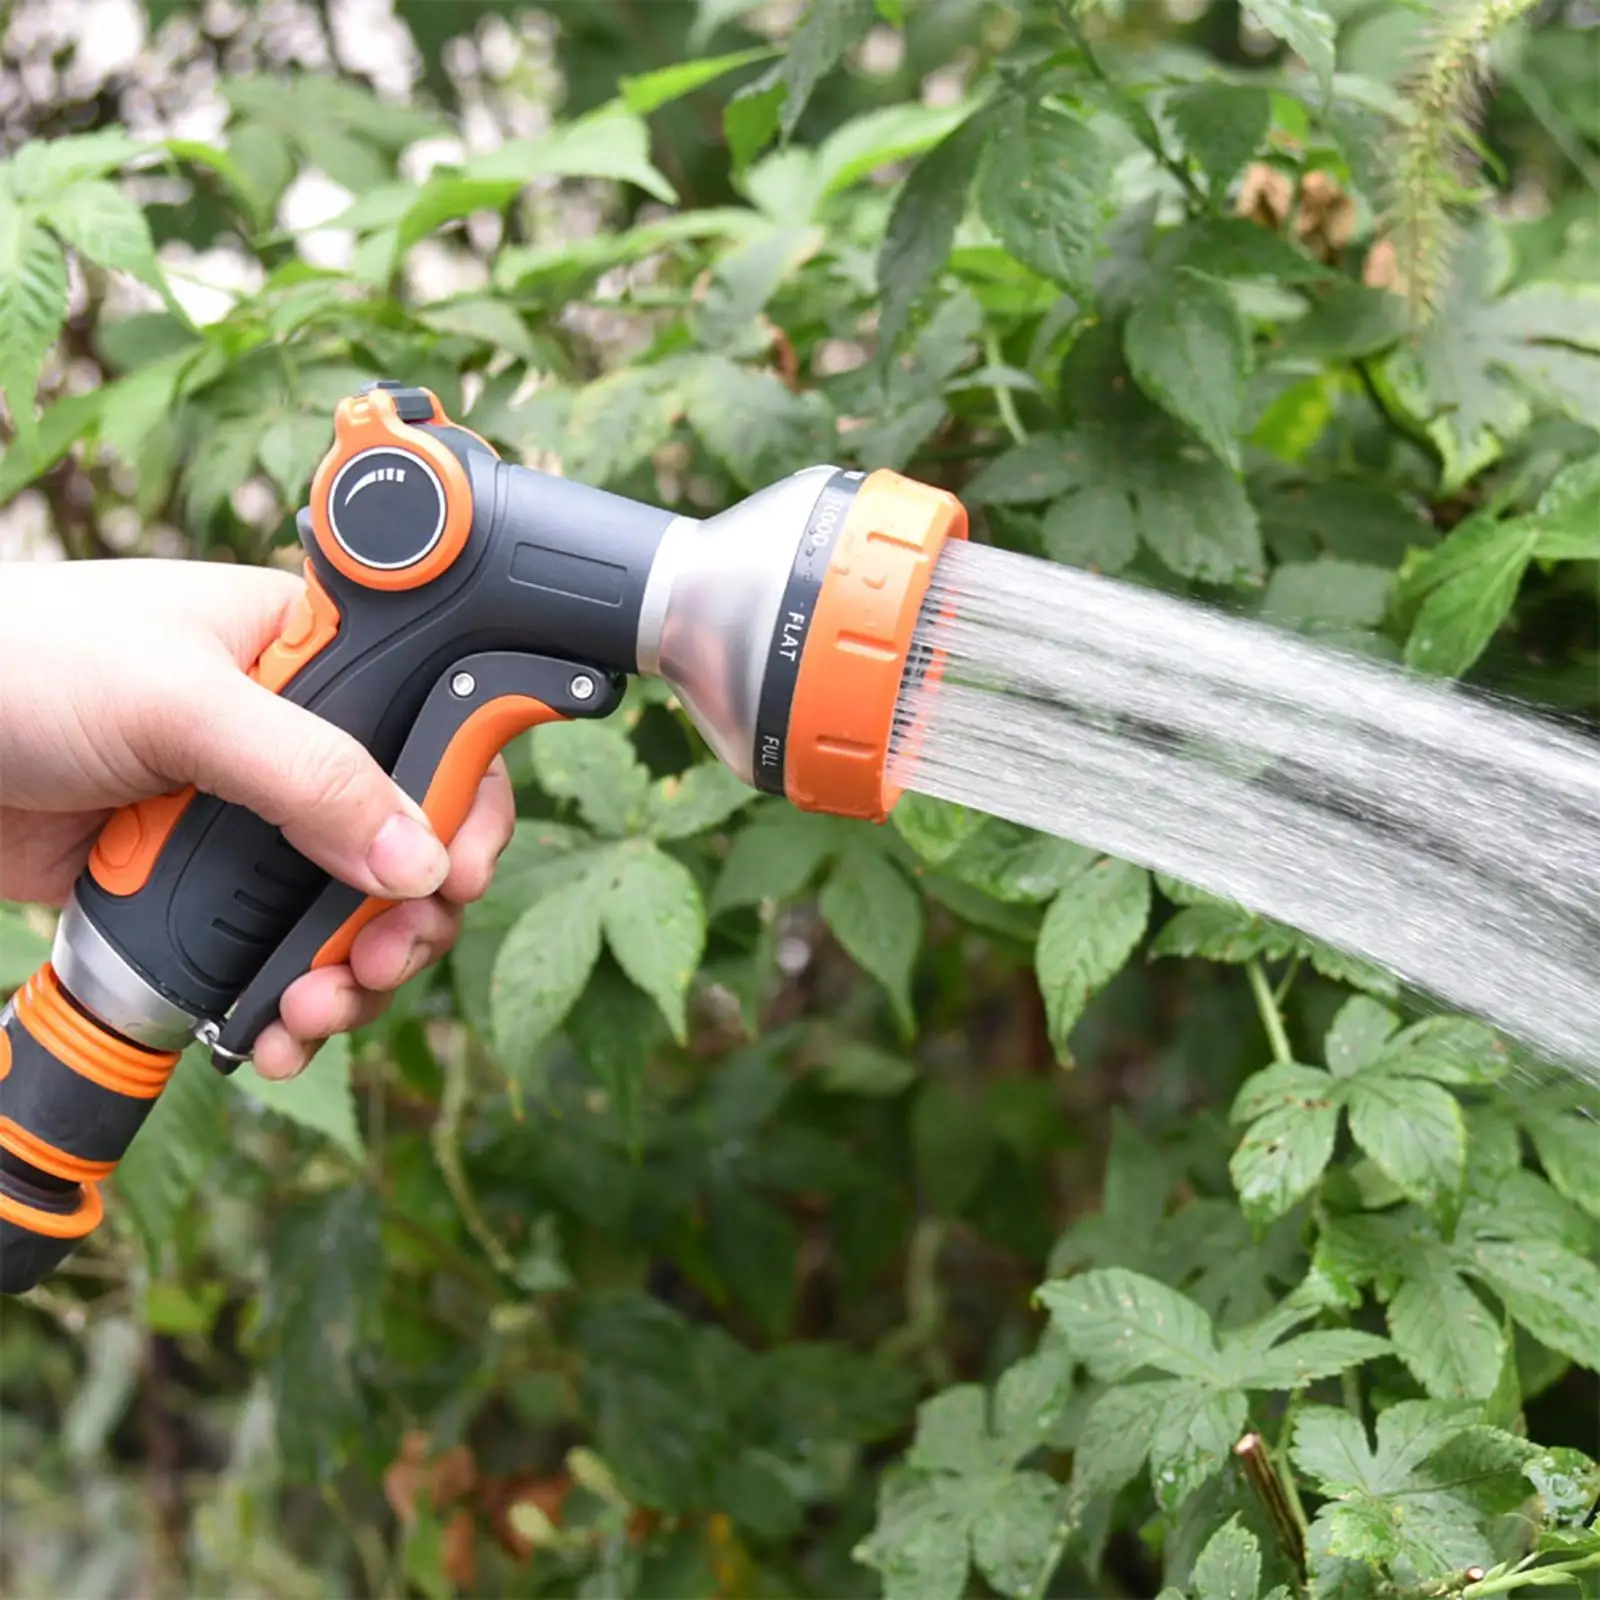 Garden Water Spray Sprinkler Water Hose Nozzle Heavy Duty Hand Sprayer